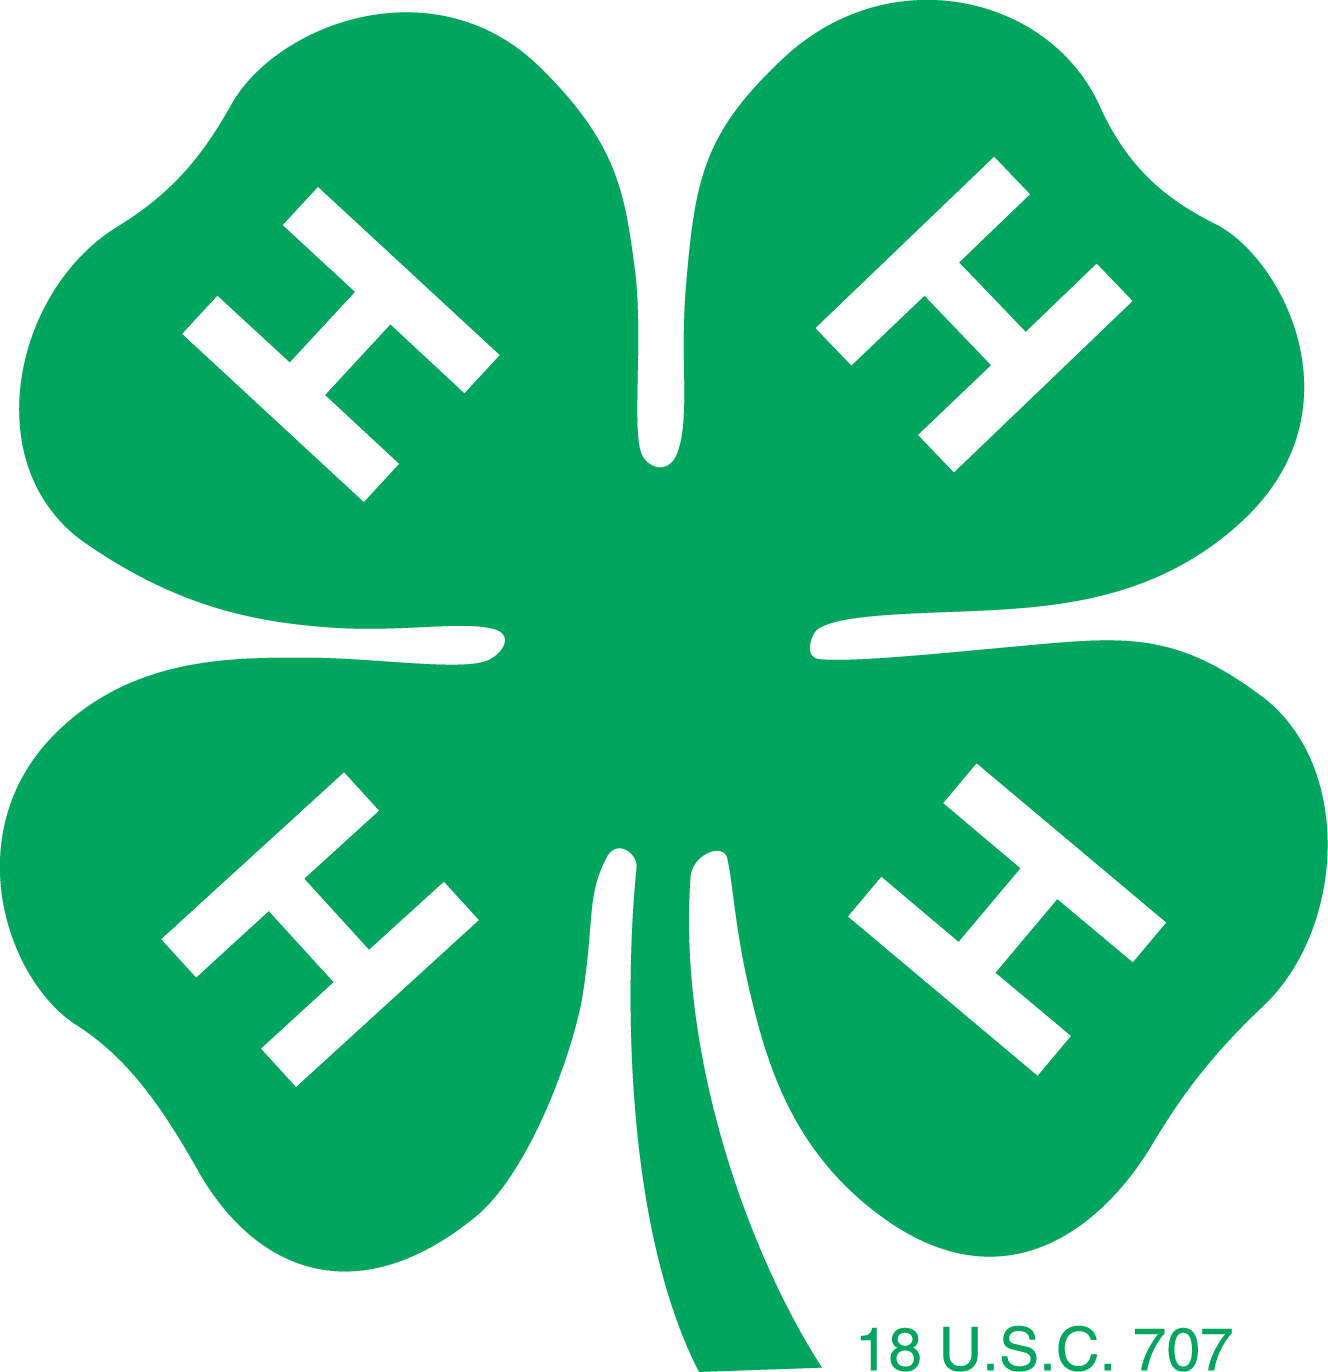 4-H logo - 4 leaf clover with H in each leaf